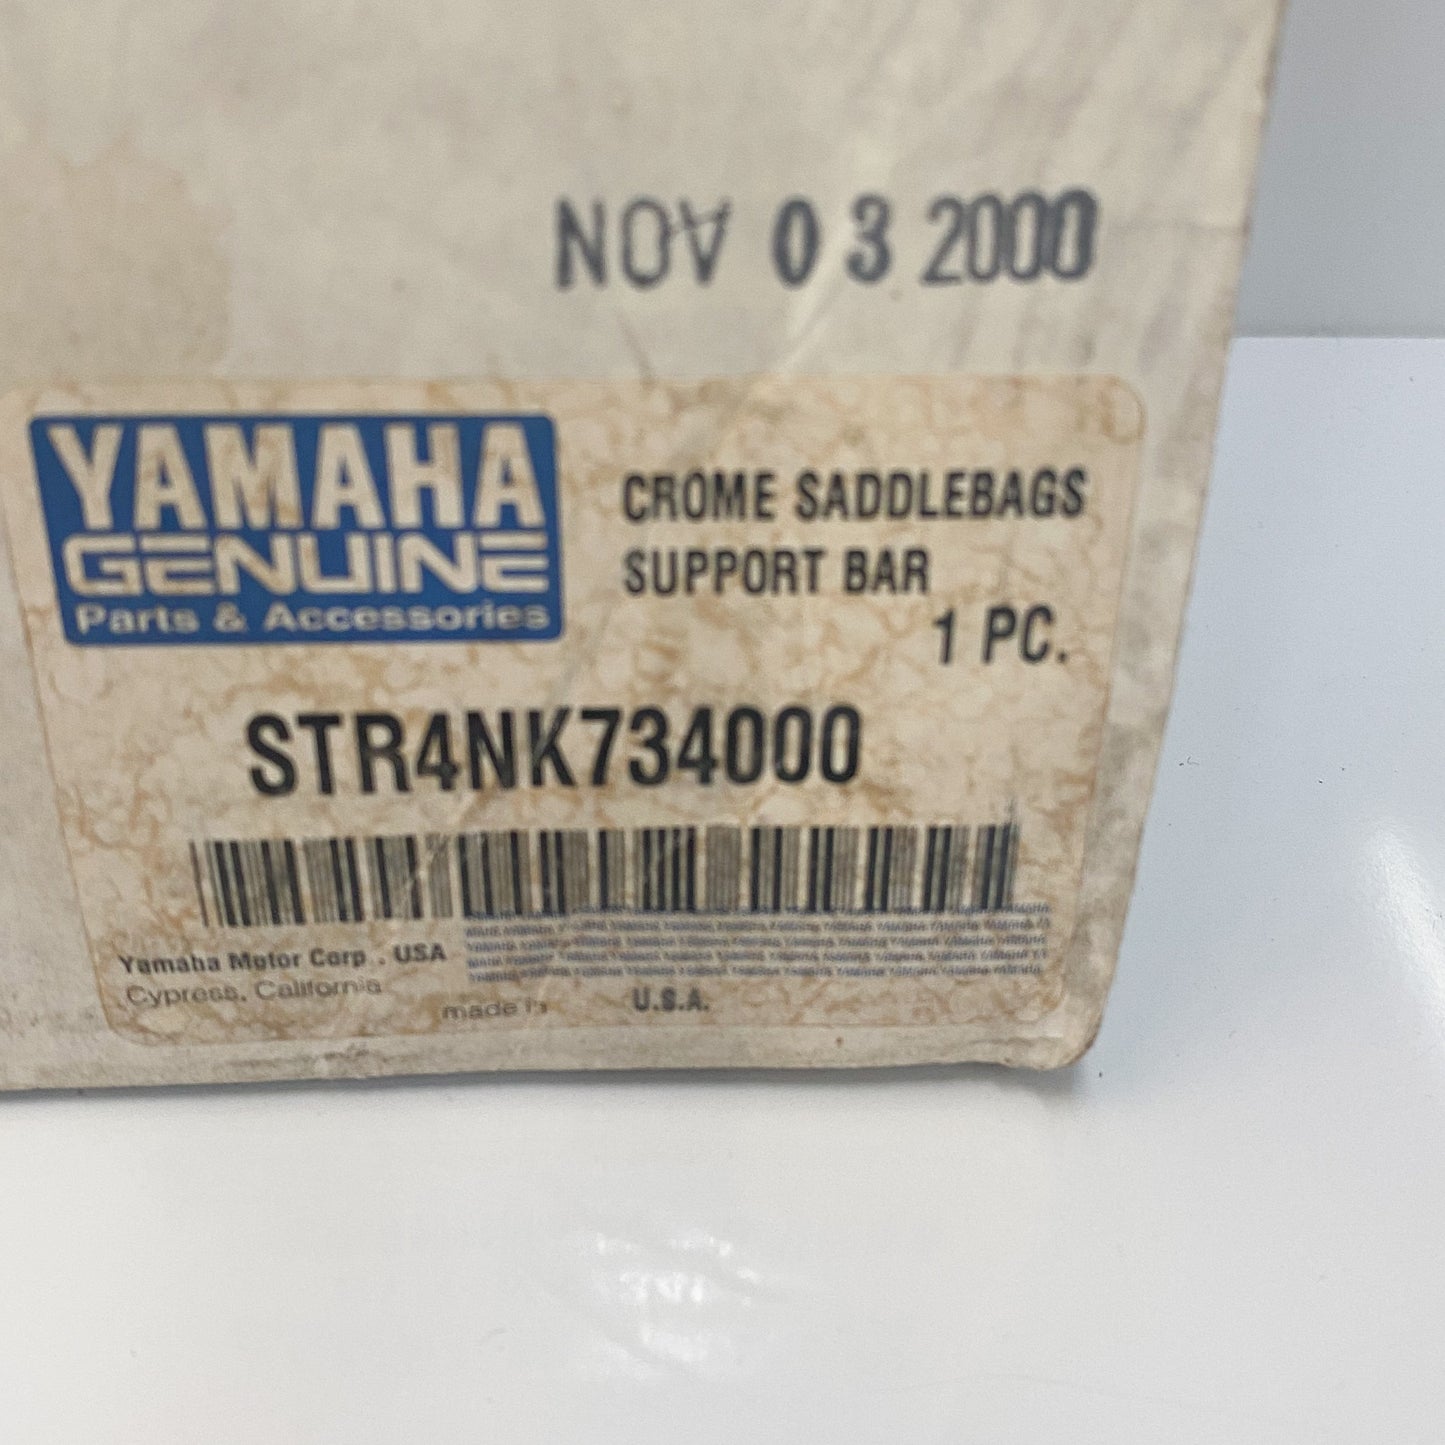 Yamaha Custom Chrome Saddlebag Supports For Royal STR-4NK73-40-00